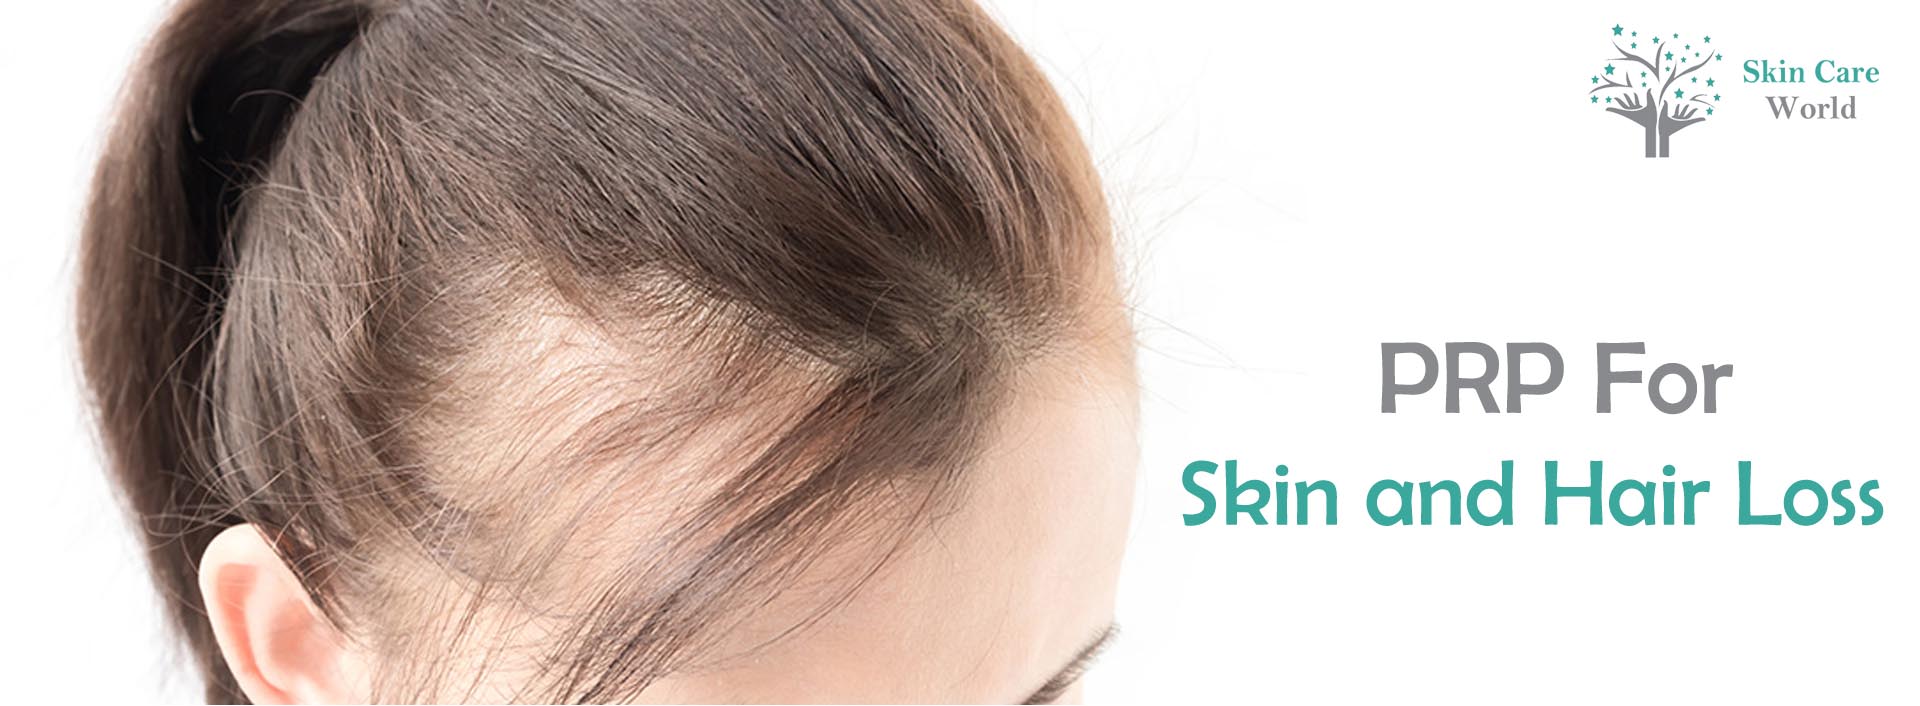 PRP for Hair Loss & Skin Treatments in Gurgaon